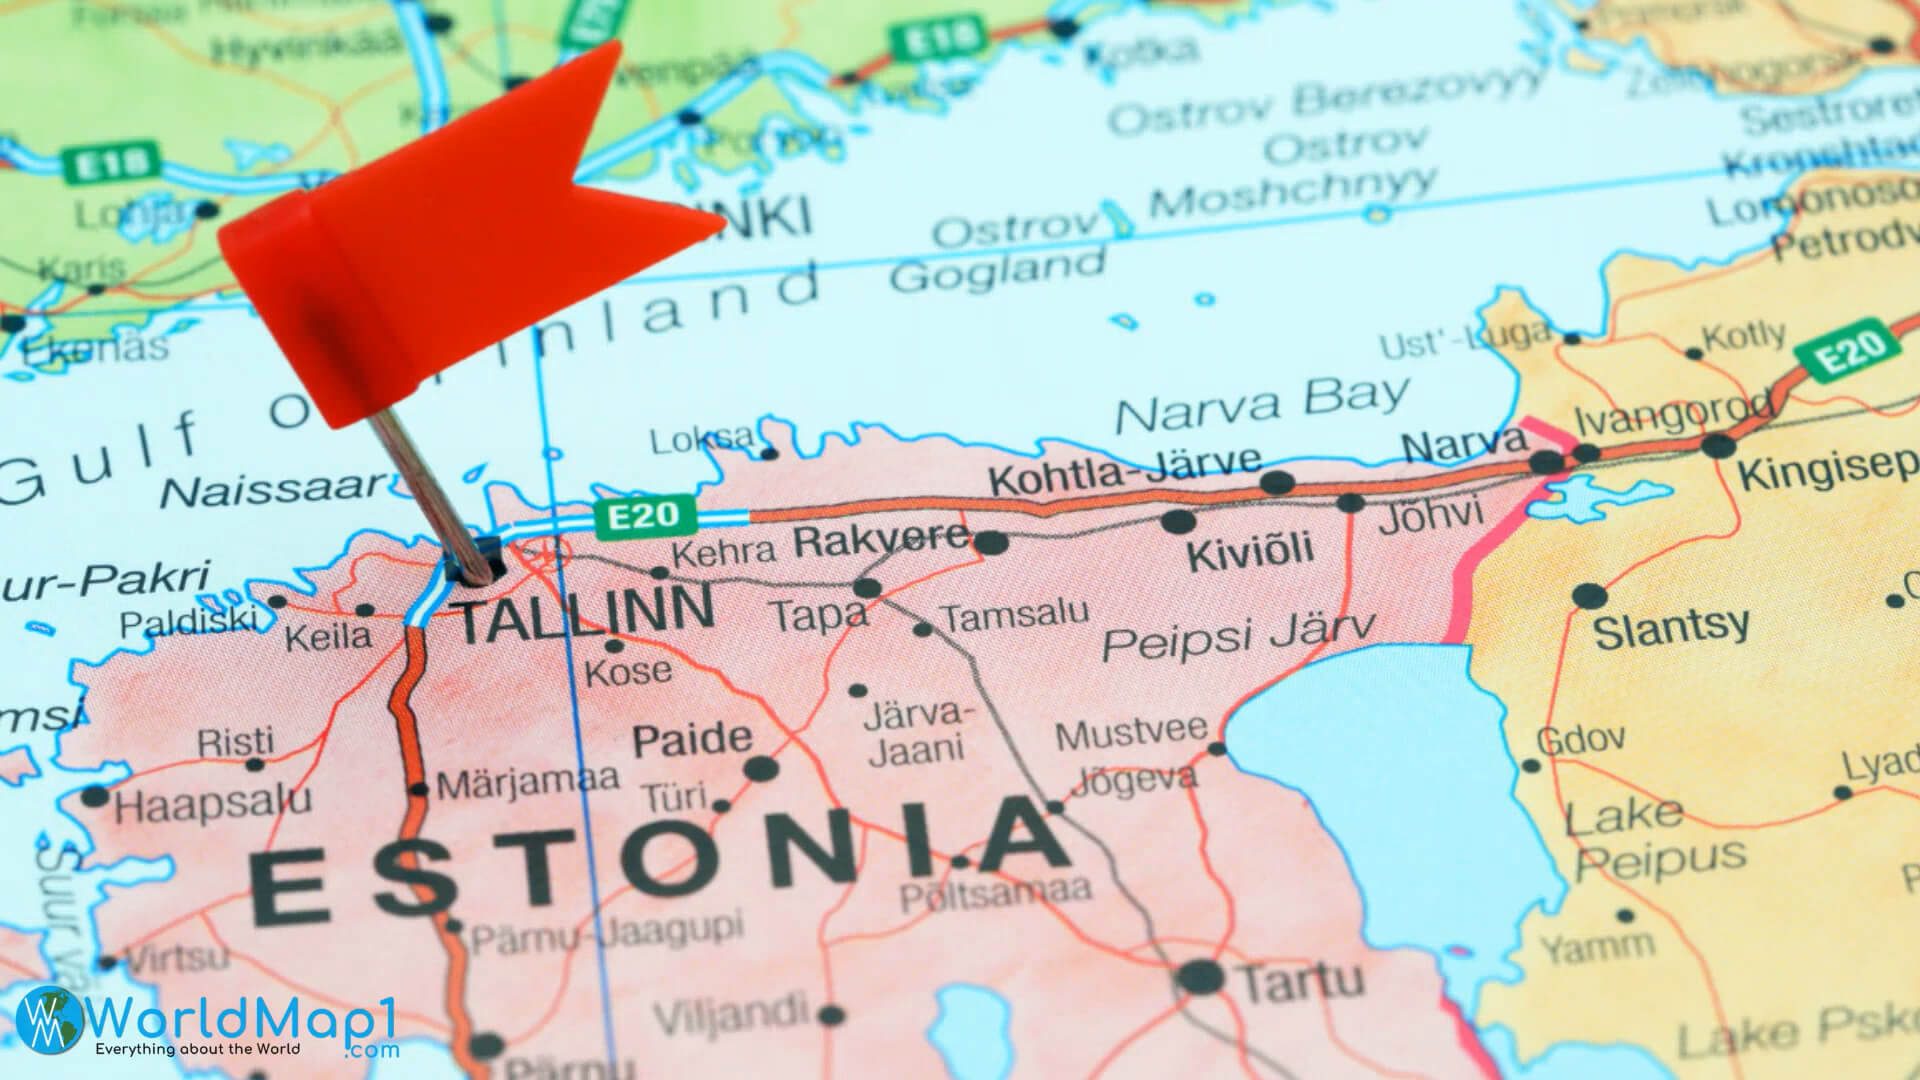 Tallinn and Estonia Main Cities Map